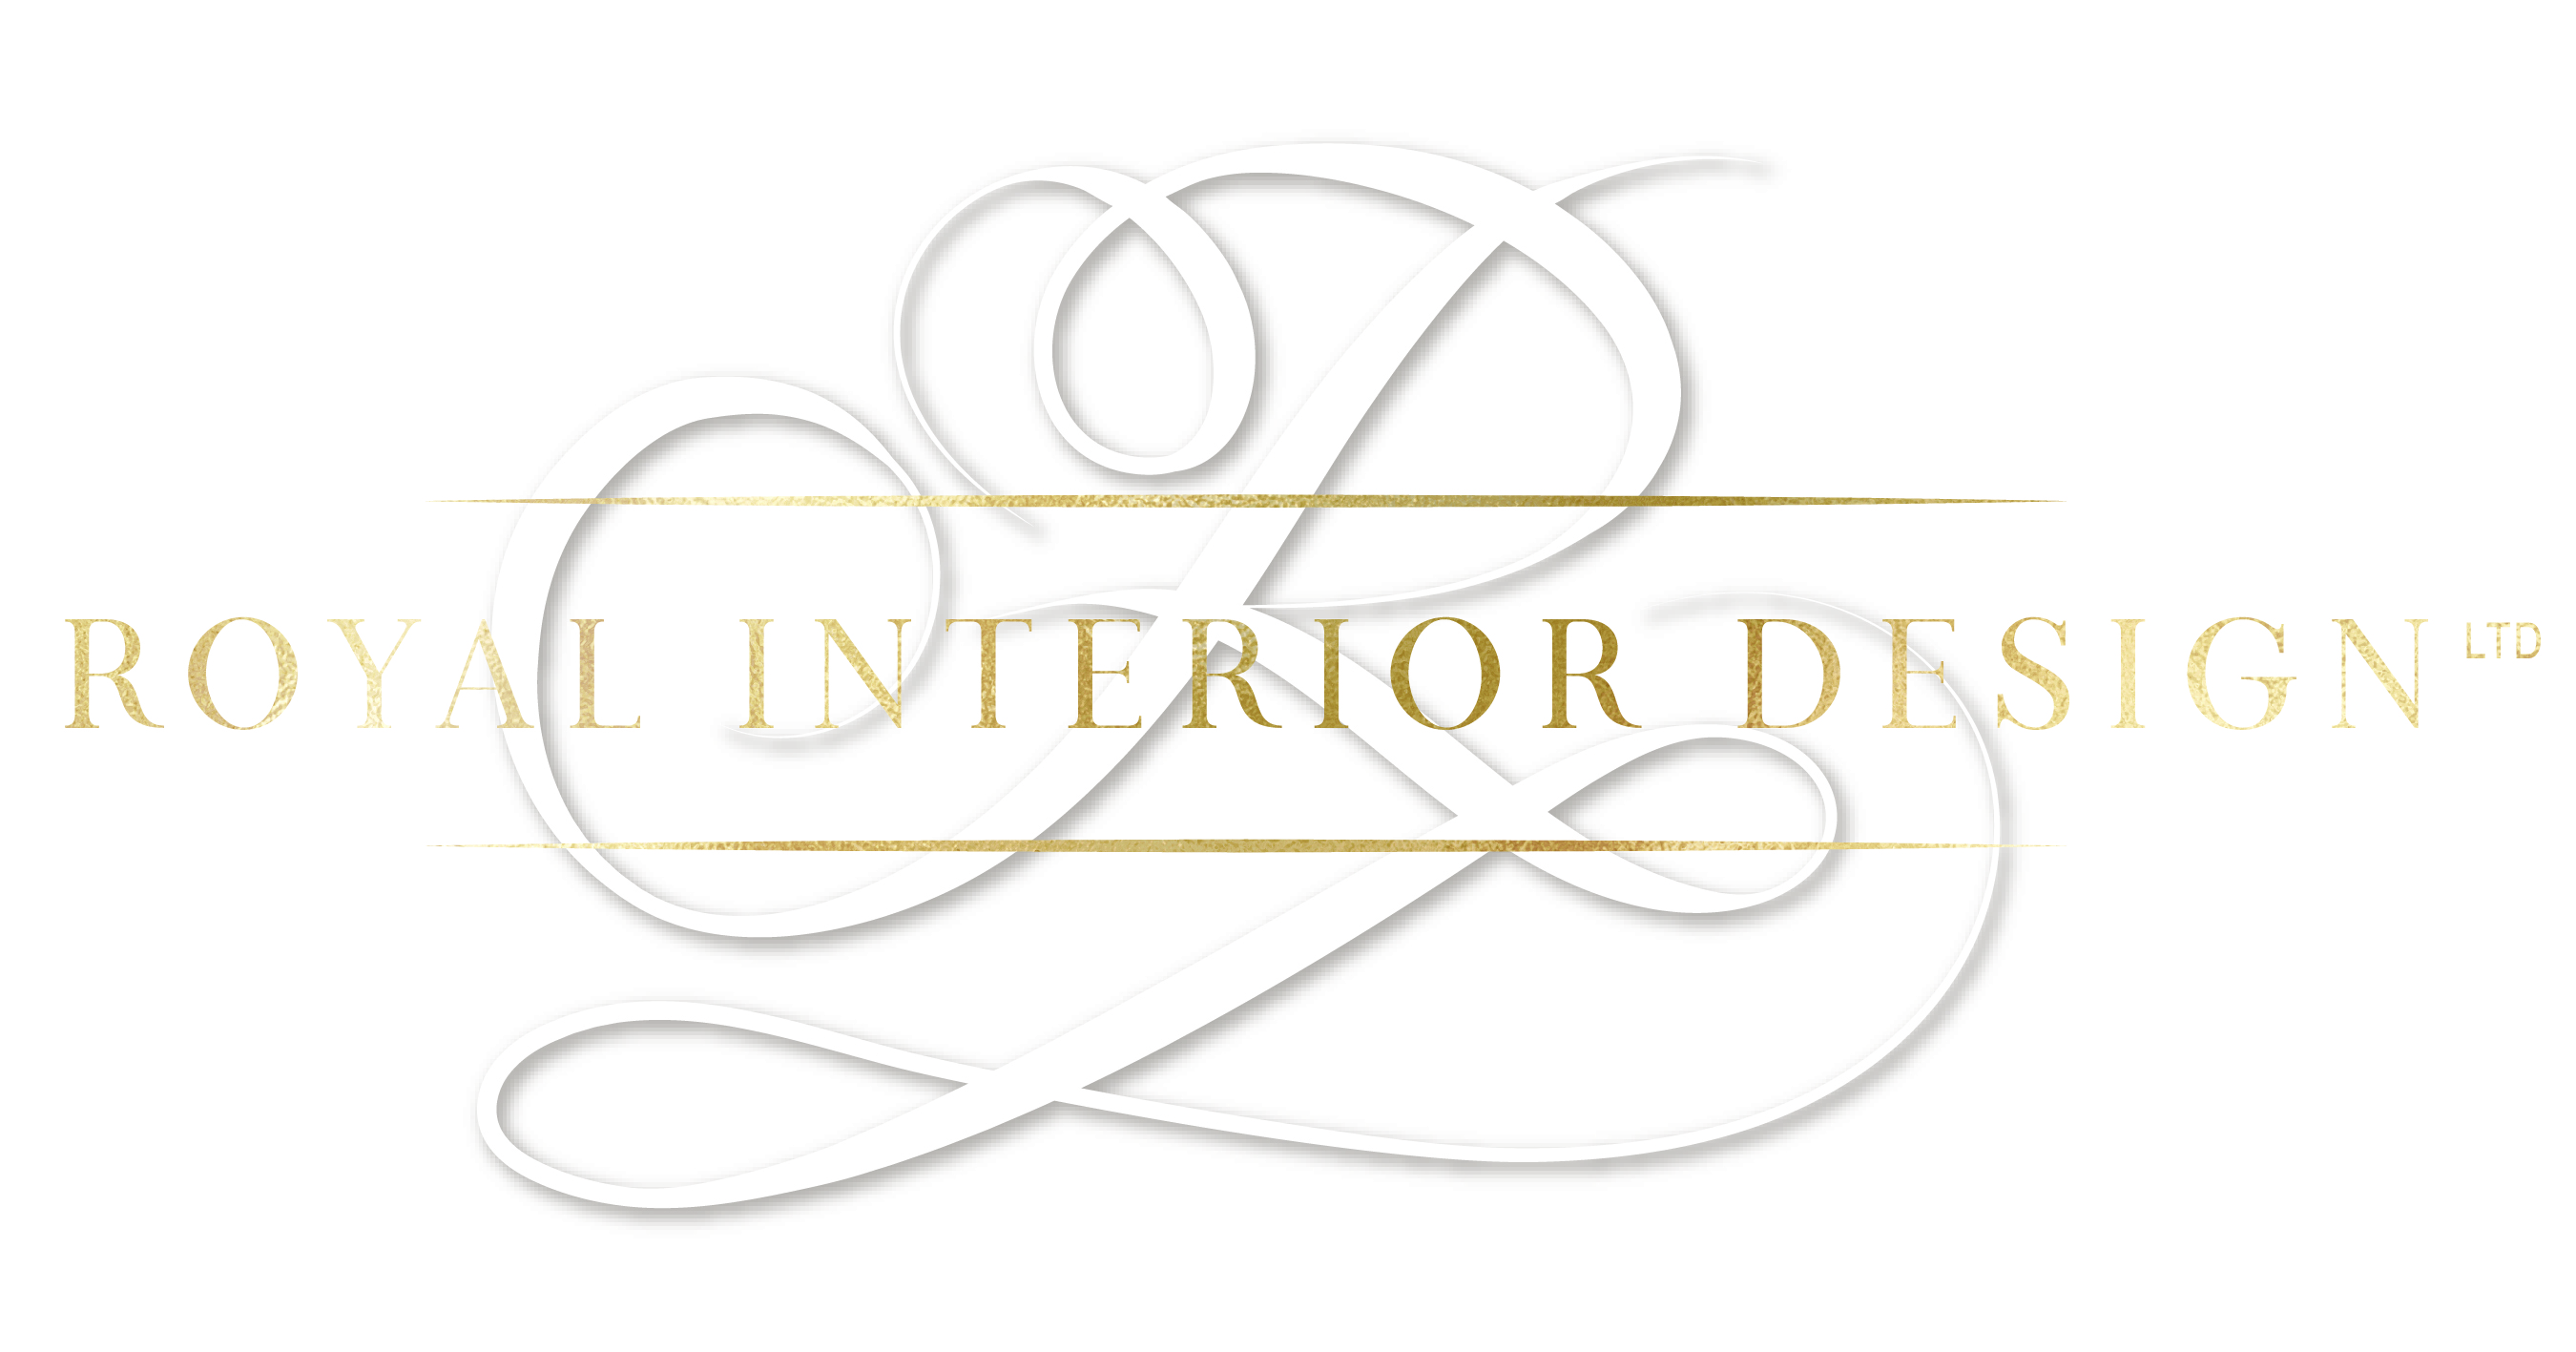 Royal Interior Design Ltd.